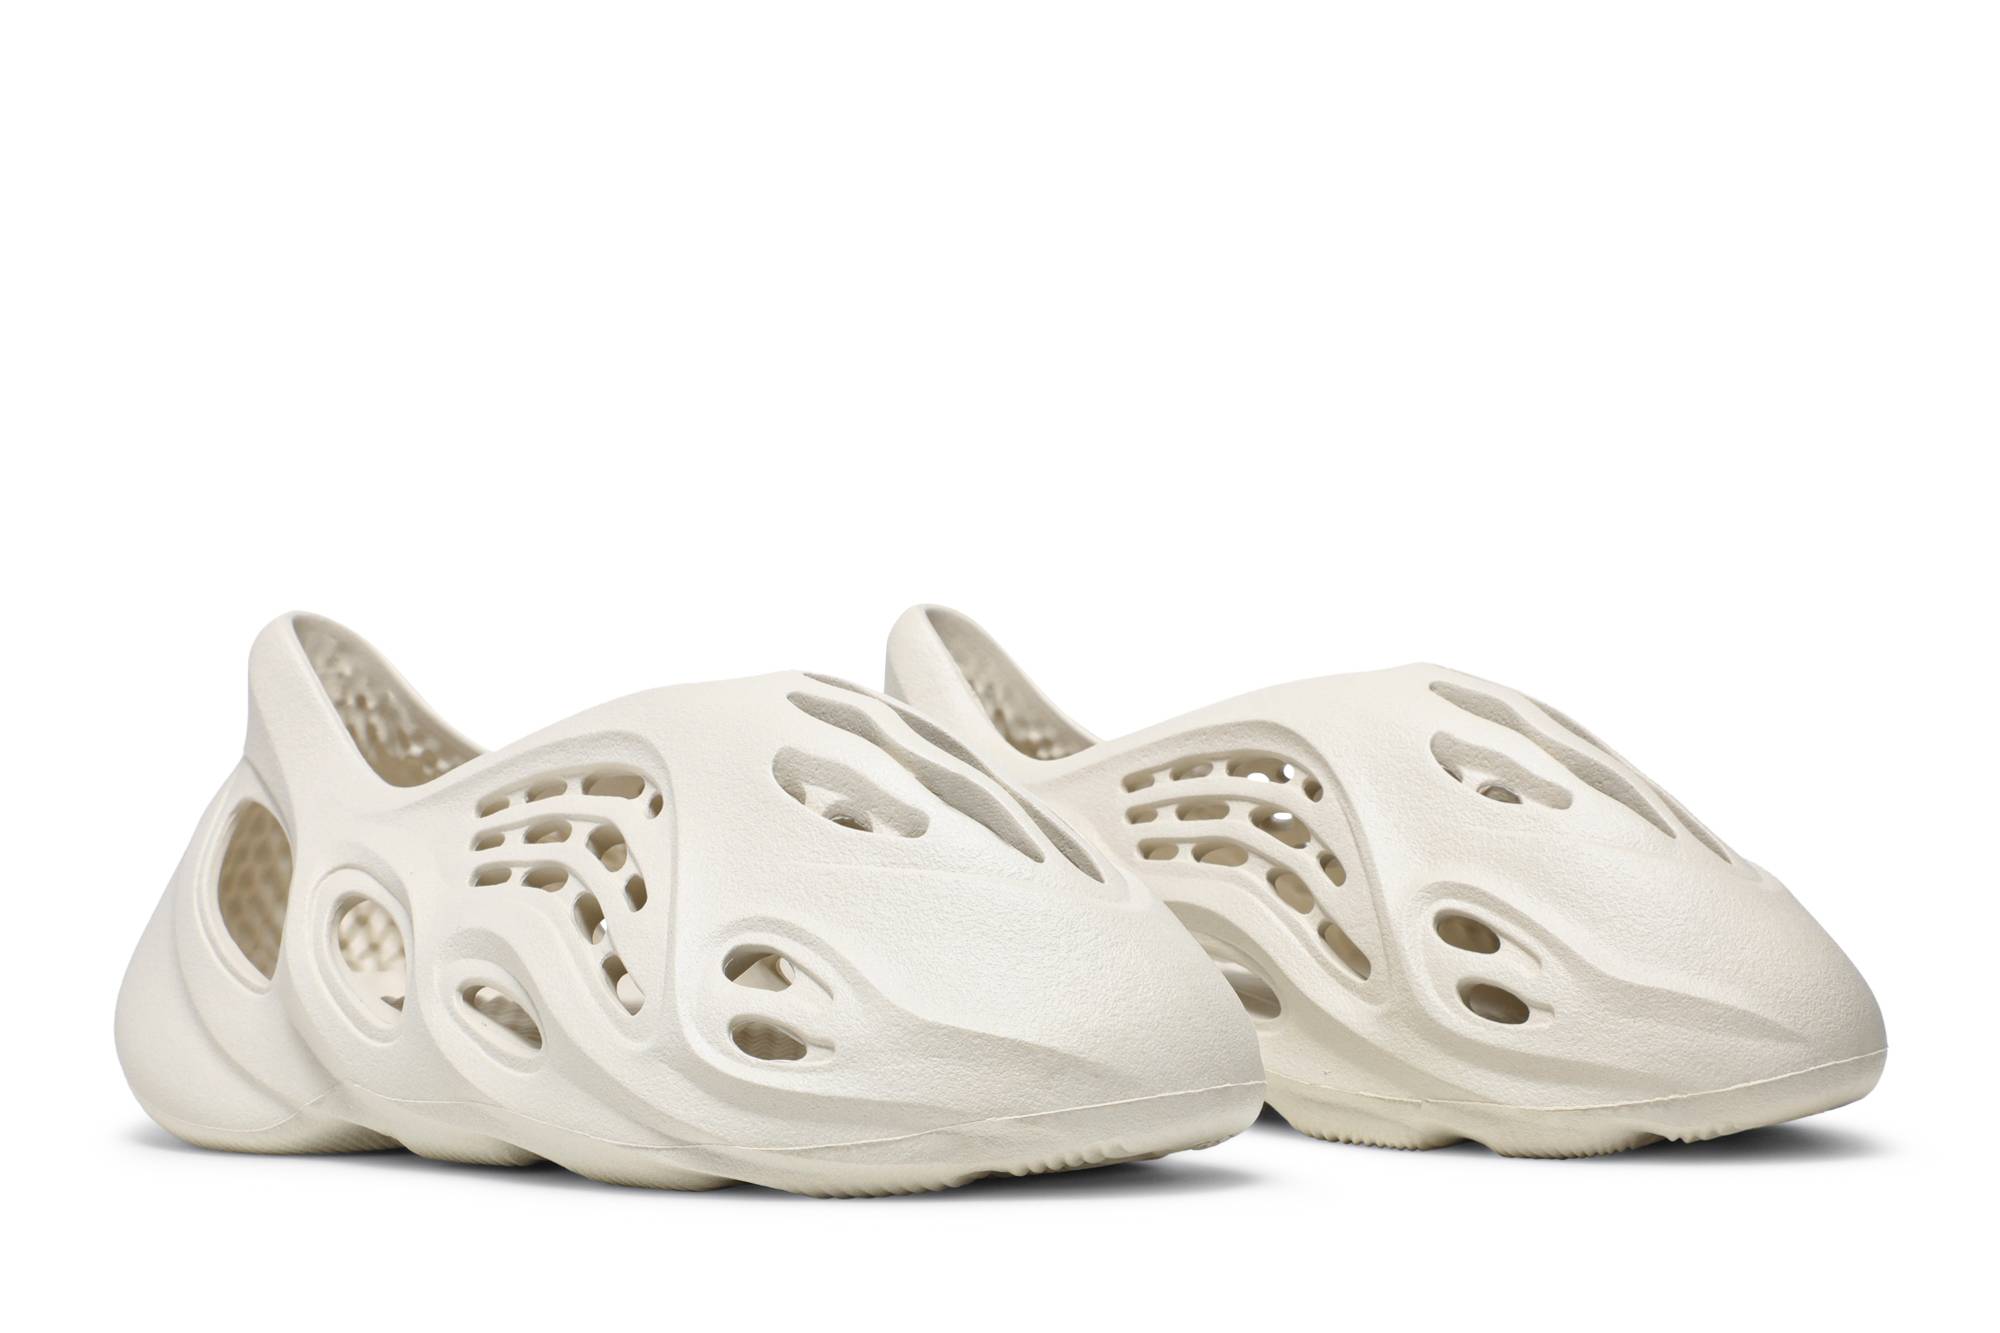 adidas Yeezy Foam Runner 'Ararat' [also 